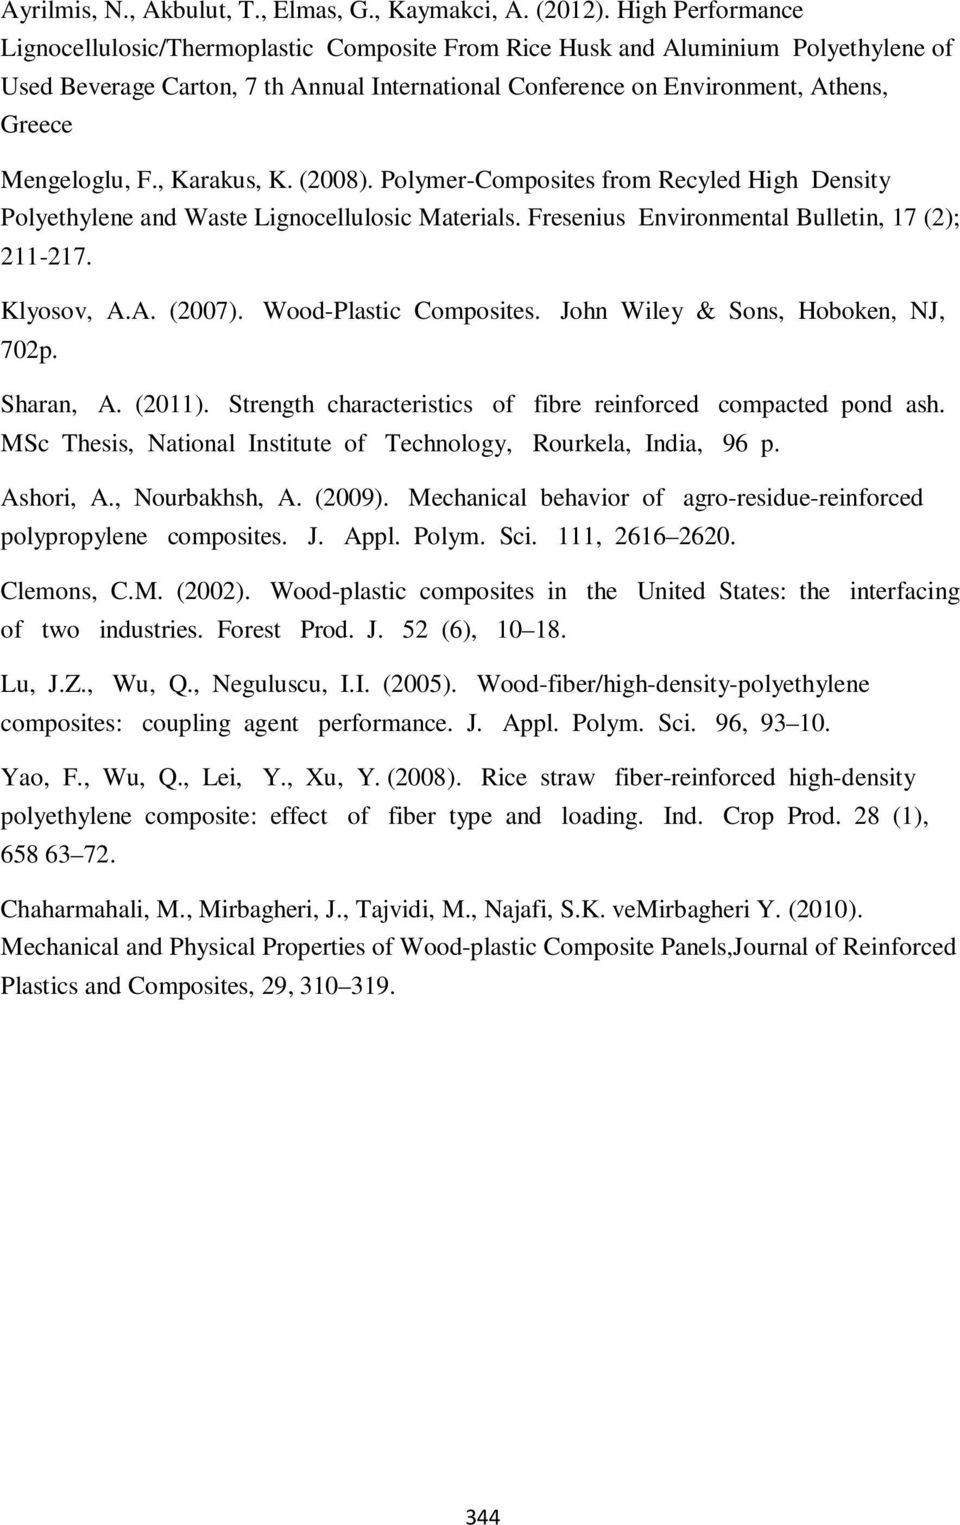 Mengeloglu, F., Karakus, K. (2008). Polymer-Composites from Recyled High Density Polyethylene and Waste Lignocellulosic Materials. Fresenius Environmental Bulletin, 17 (2); 211-217. Klyosov, A.